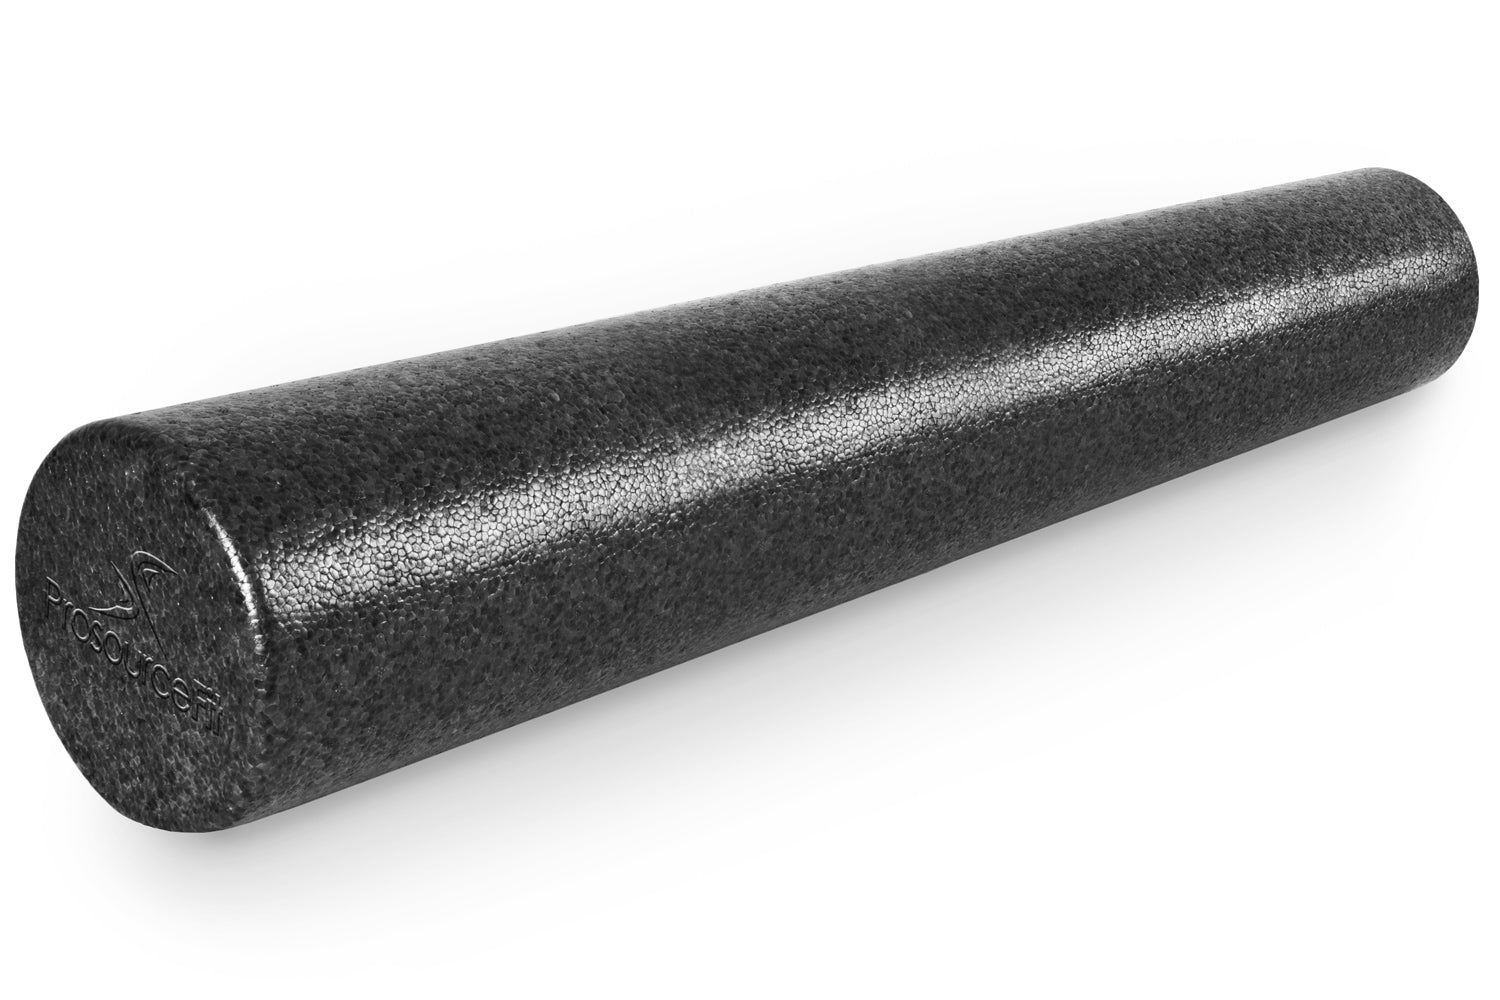 36 x 6 Black High Density Foam Roller